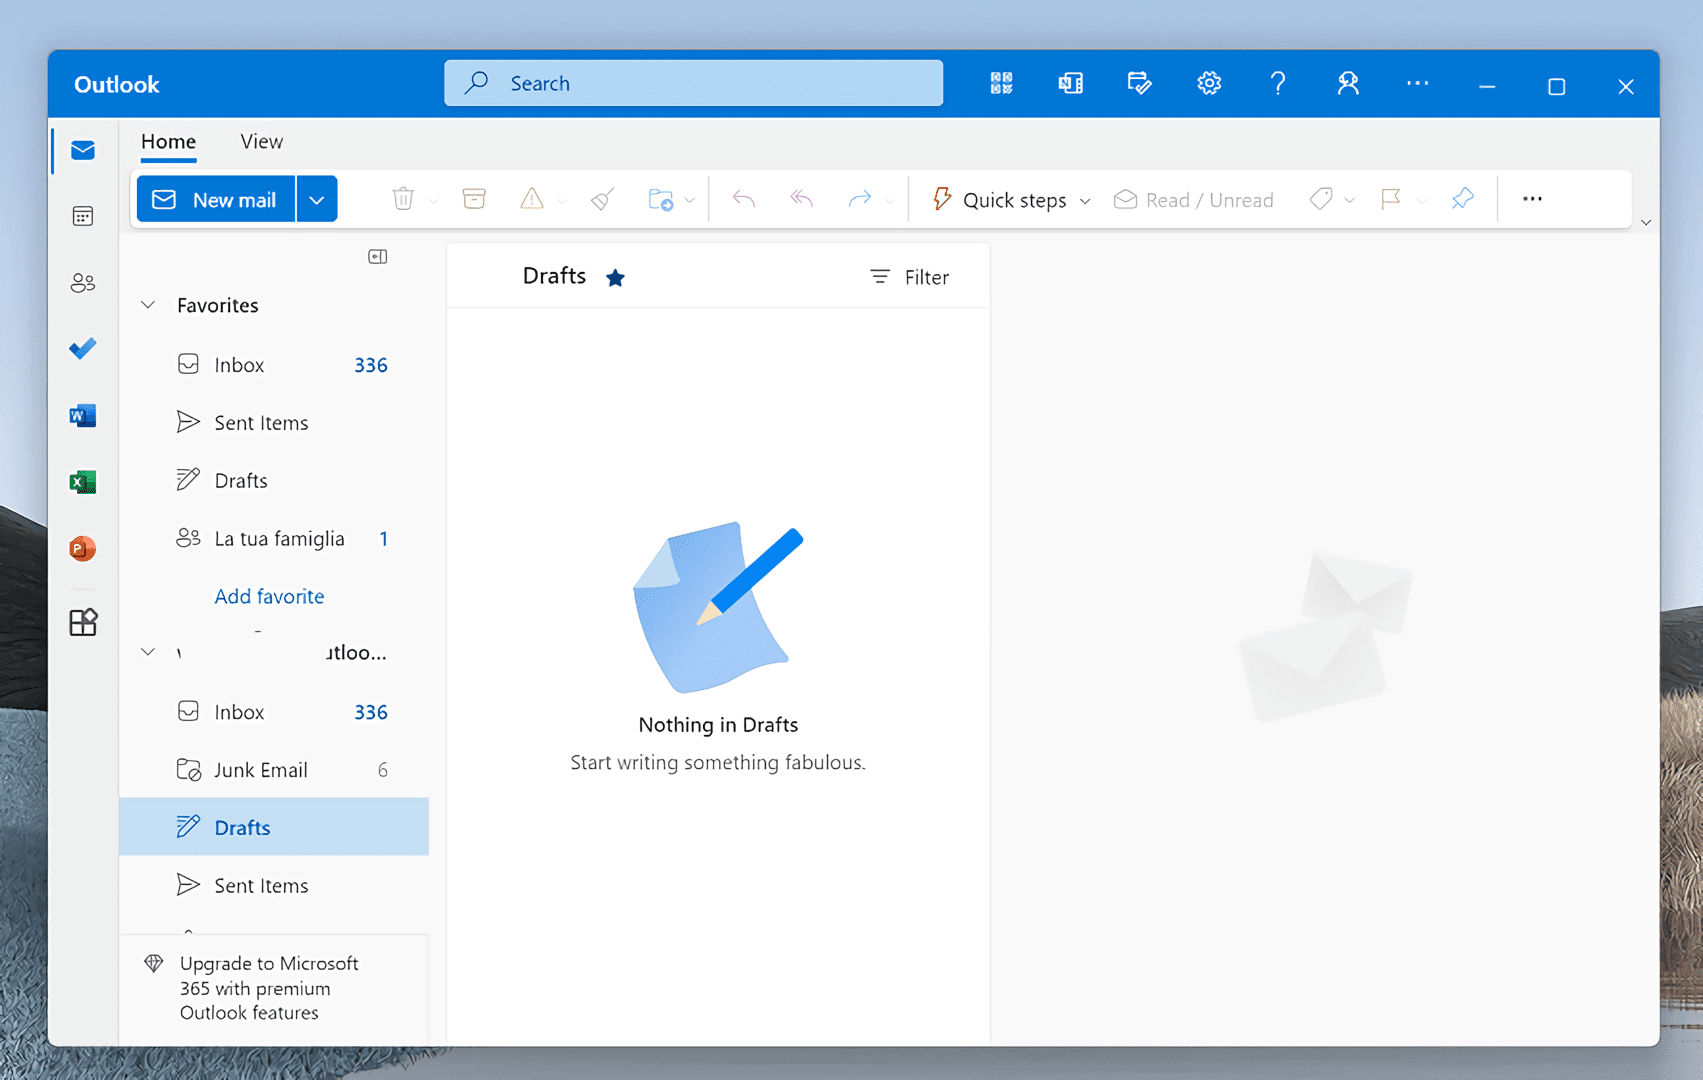 Outlook Web App for Windows brings Outlook.com to the desktop